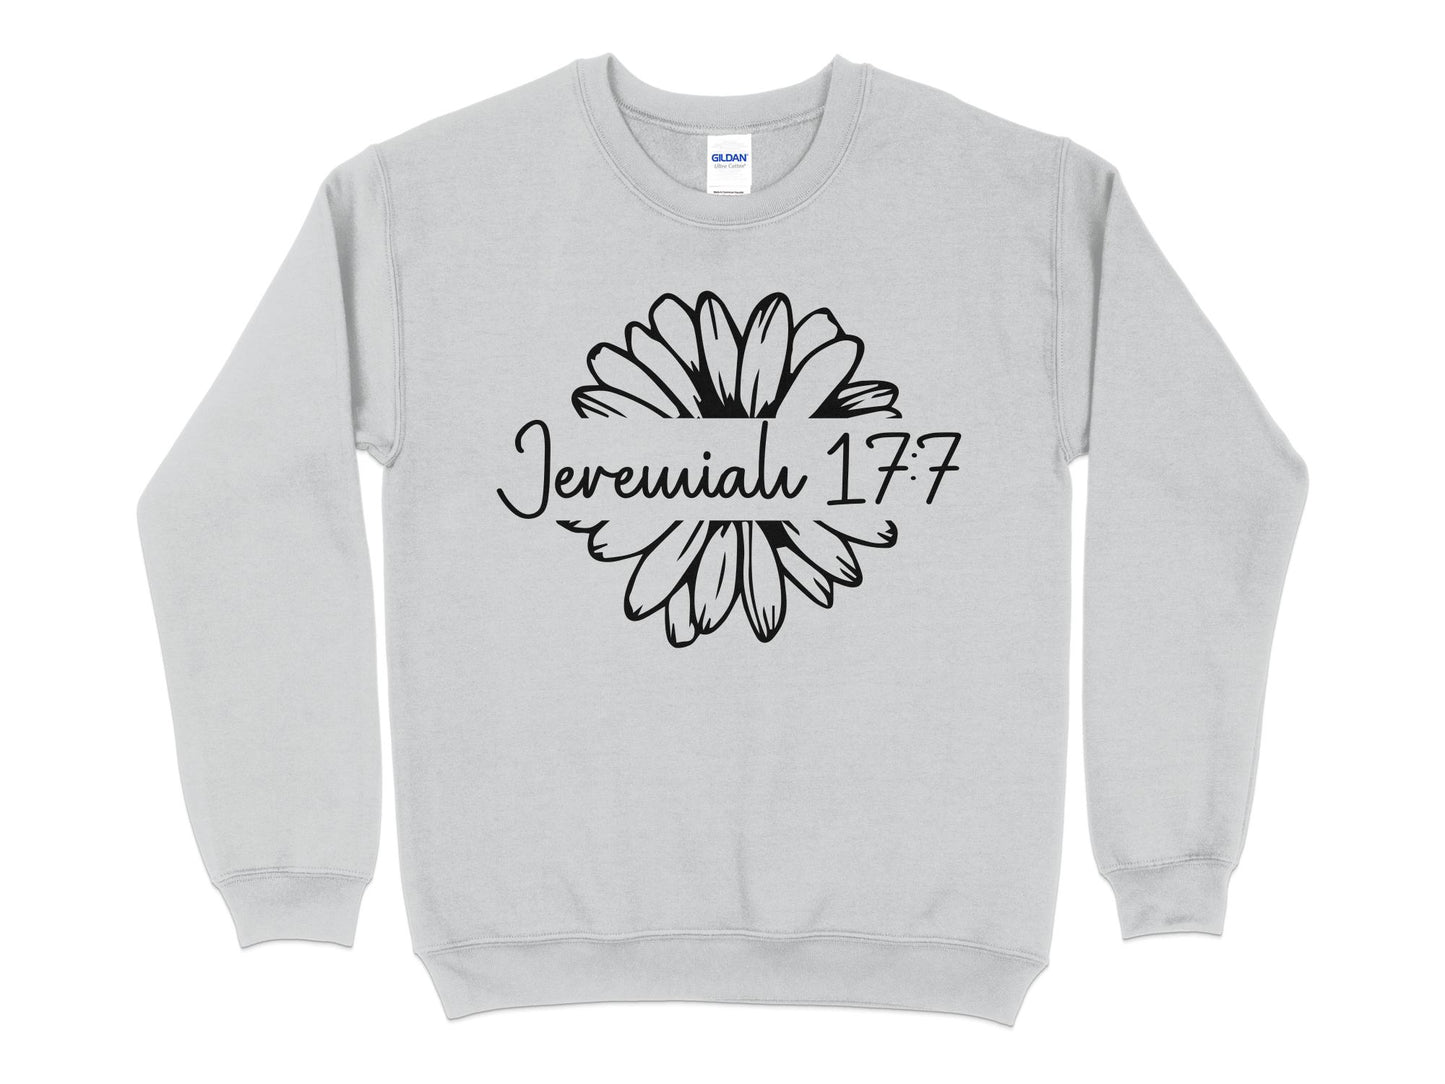 Unisex Jeremiah 17:7 Floral Sweatshirt, Christian Scripture Sweater, Bible Verse Pullover, Casual Spiritual Clothing, Faith-Based Top - Mardonyx Sweatshirt S / Sport Grey